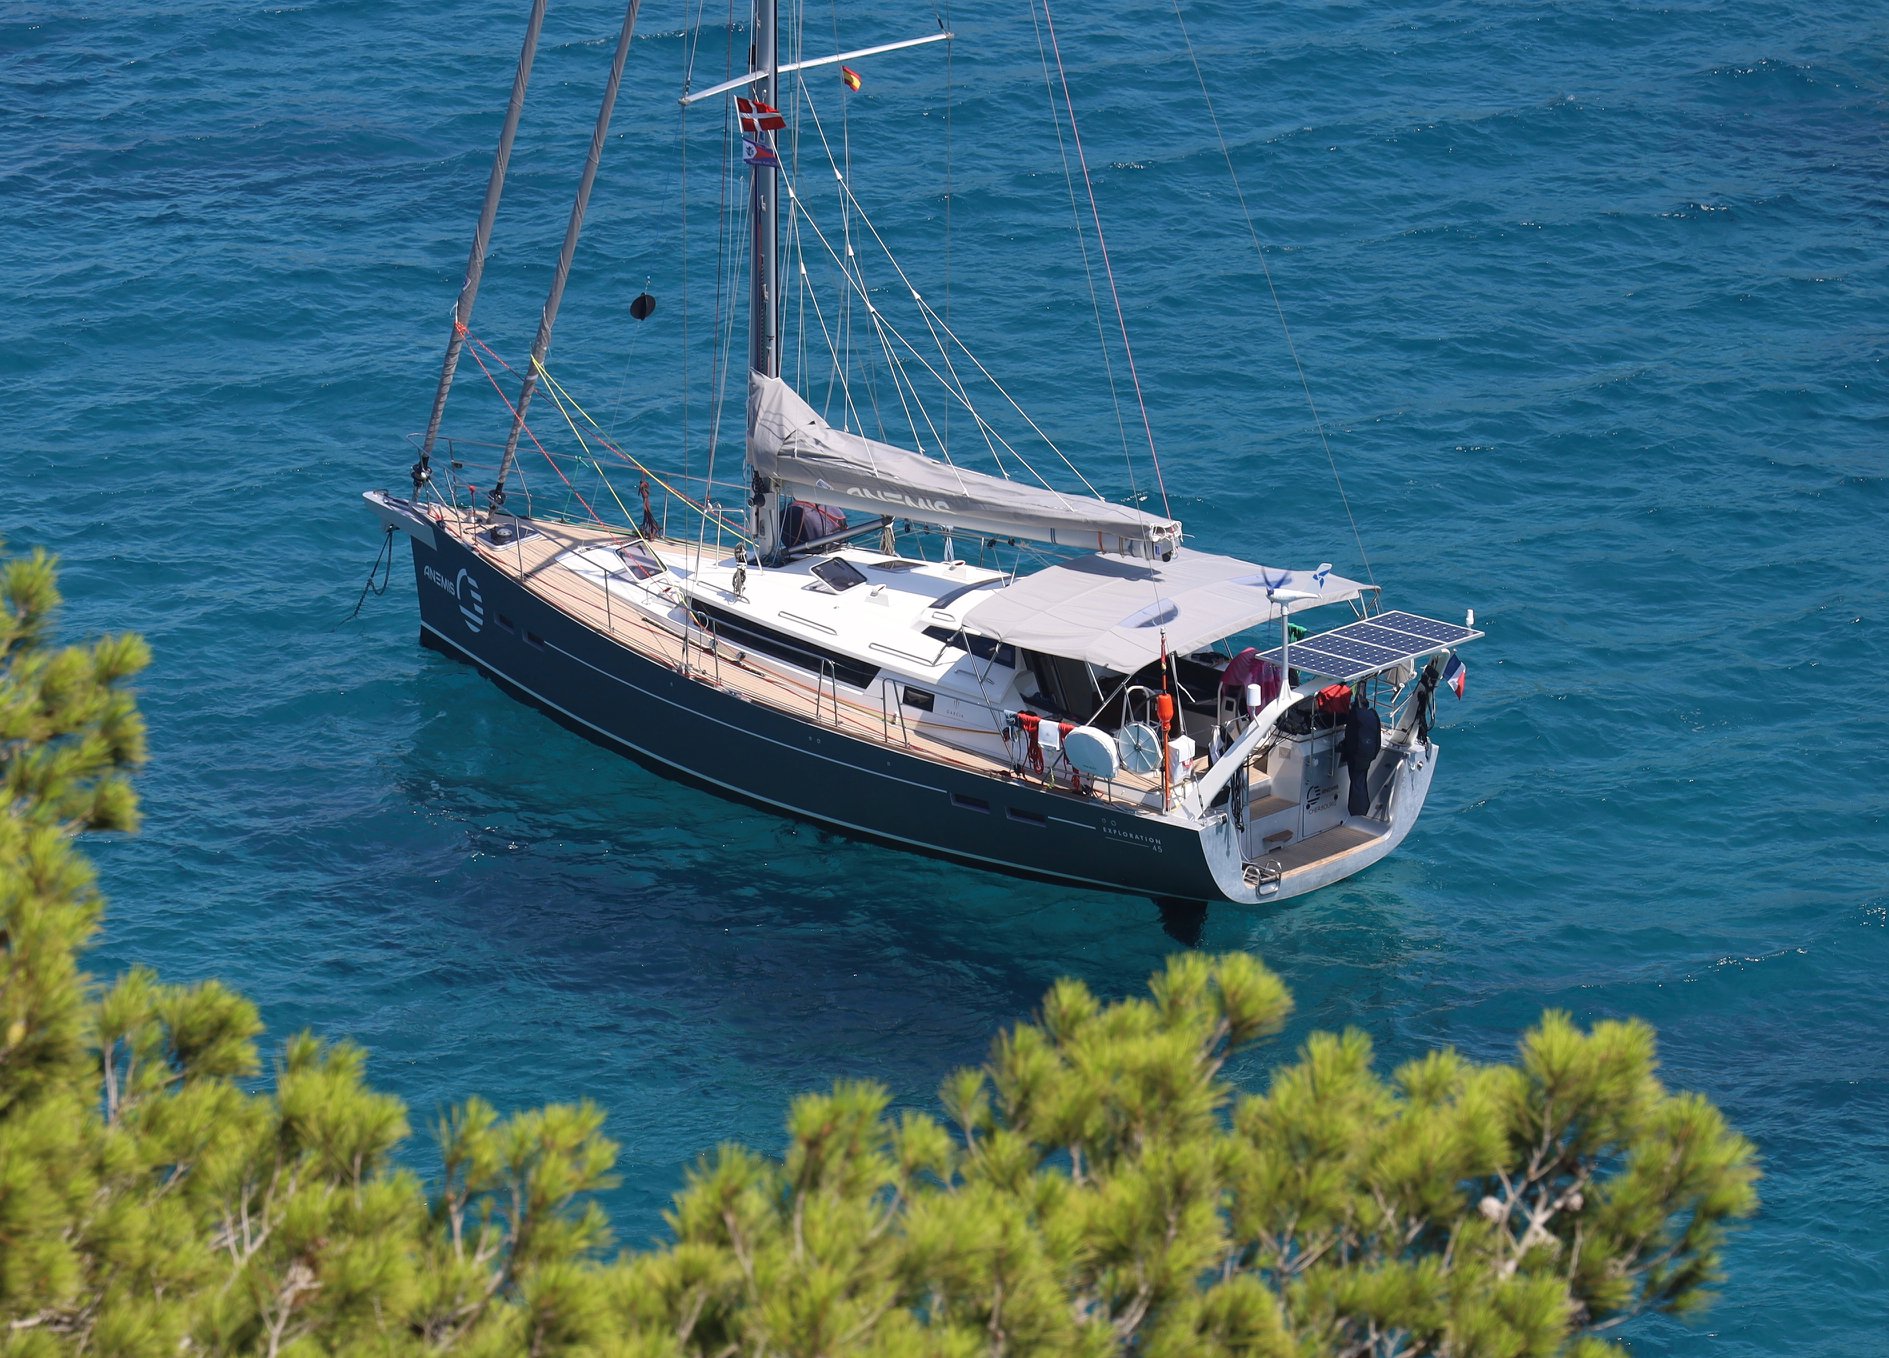 garcia yachts exploration 45 price